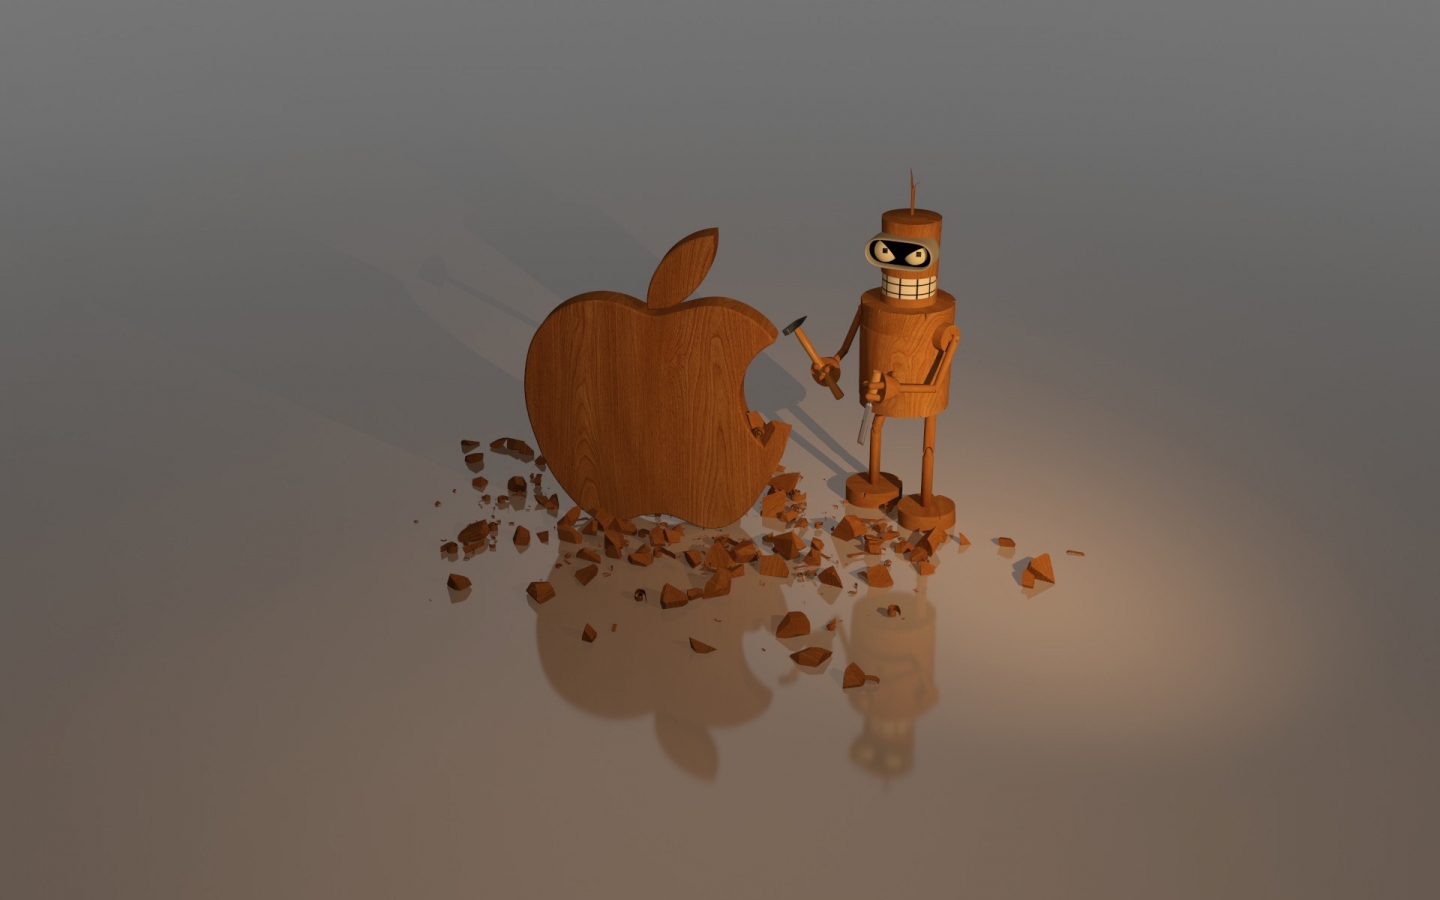 Wood Apple Sculpture for 1440 x 900 widescreen resolution